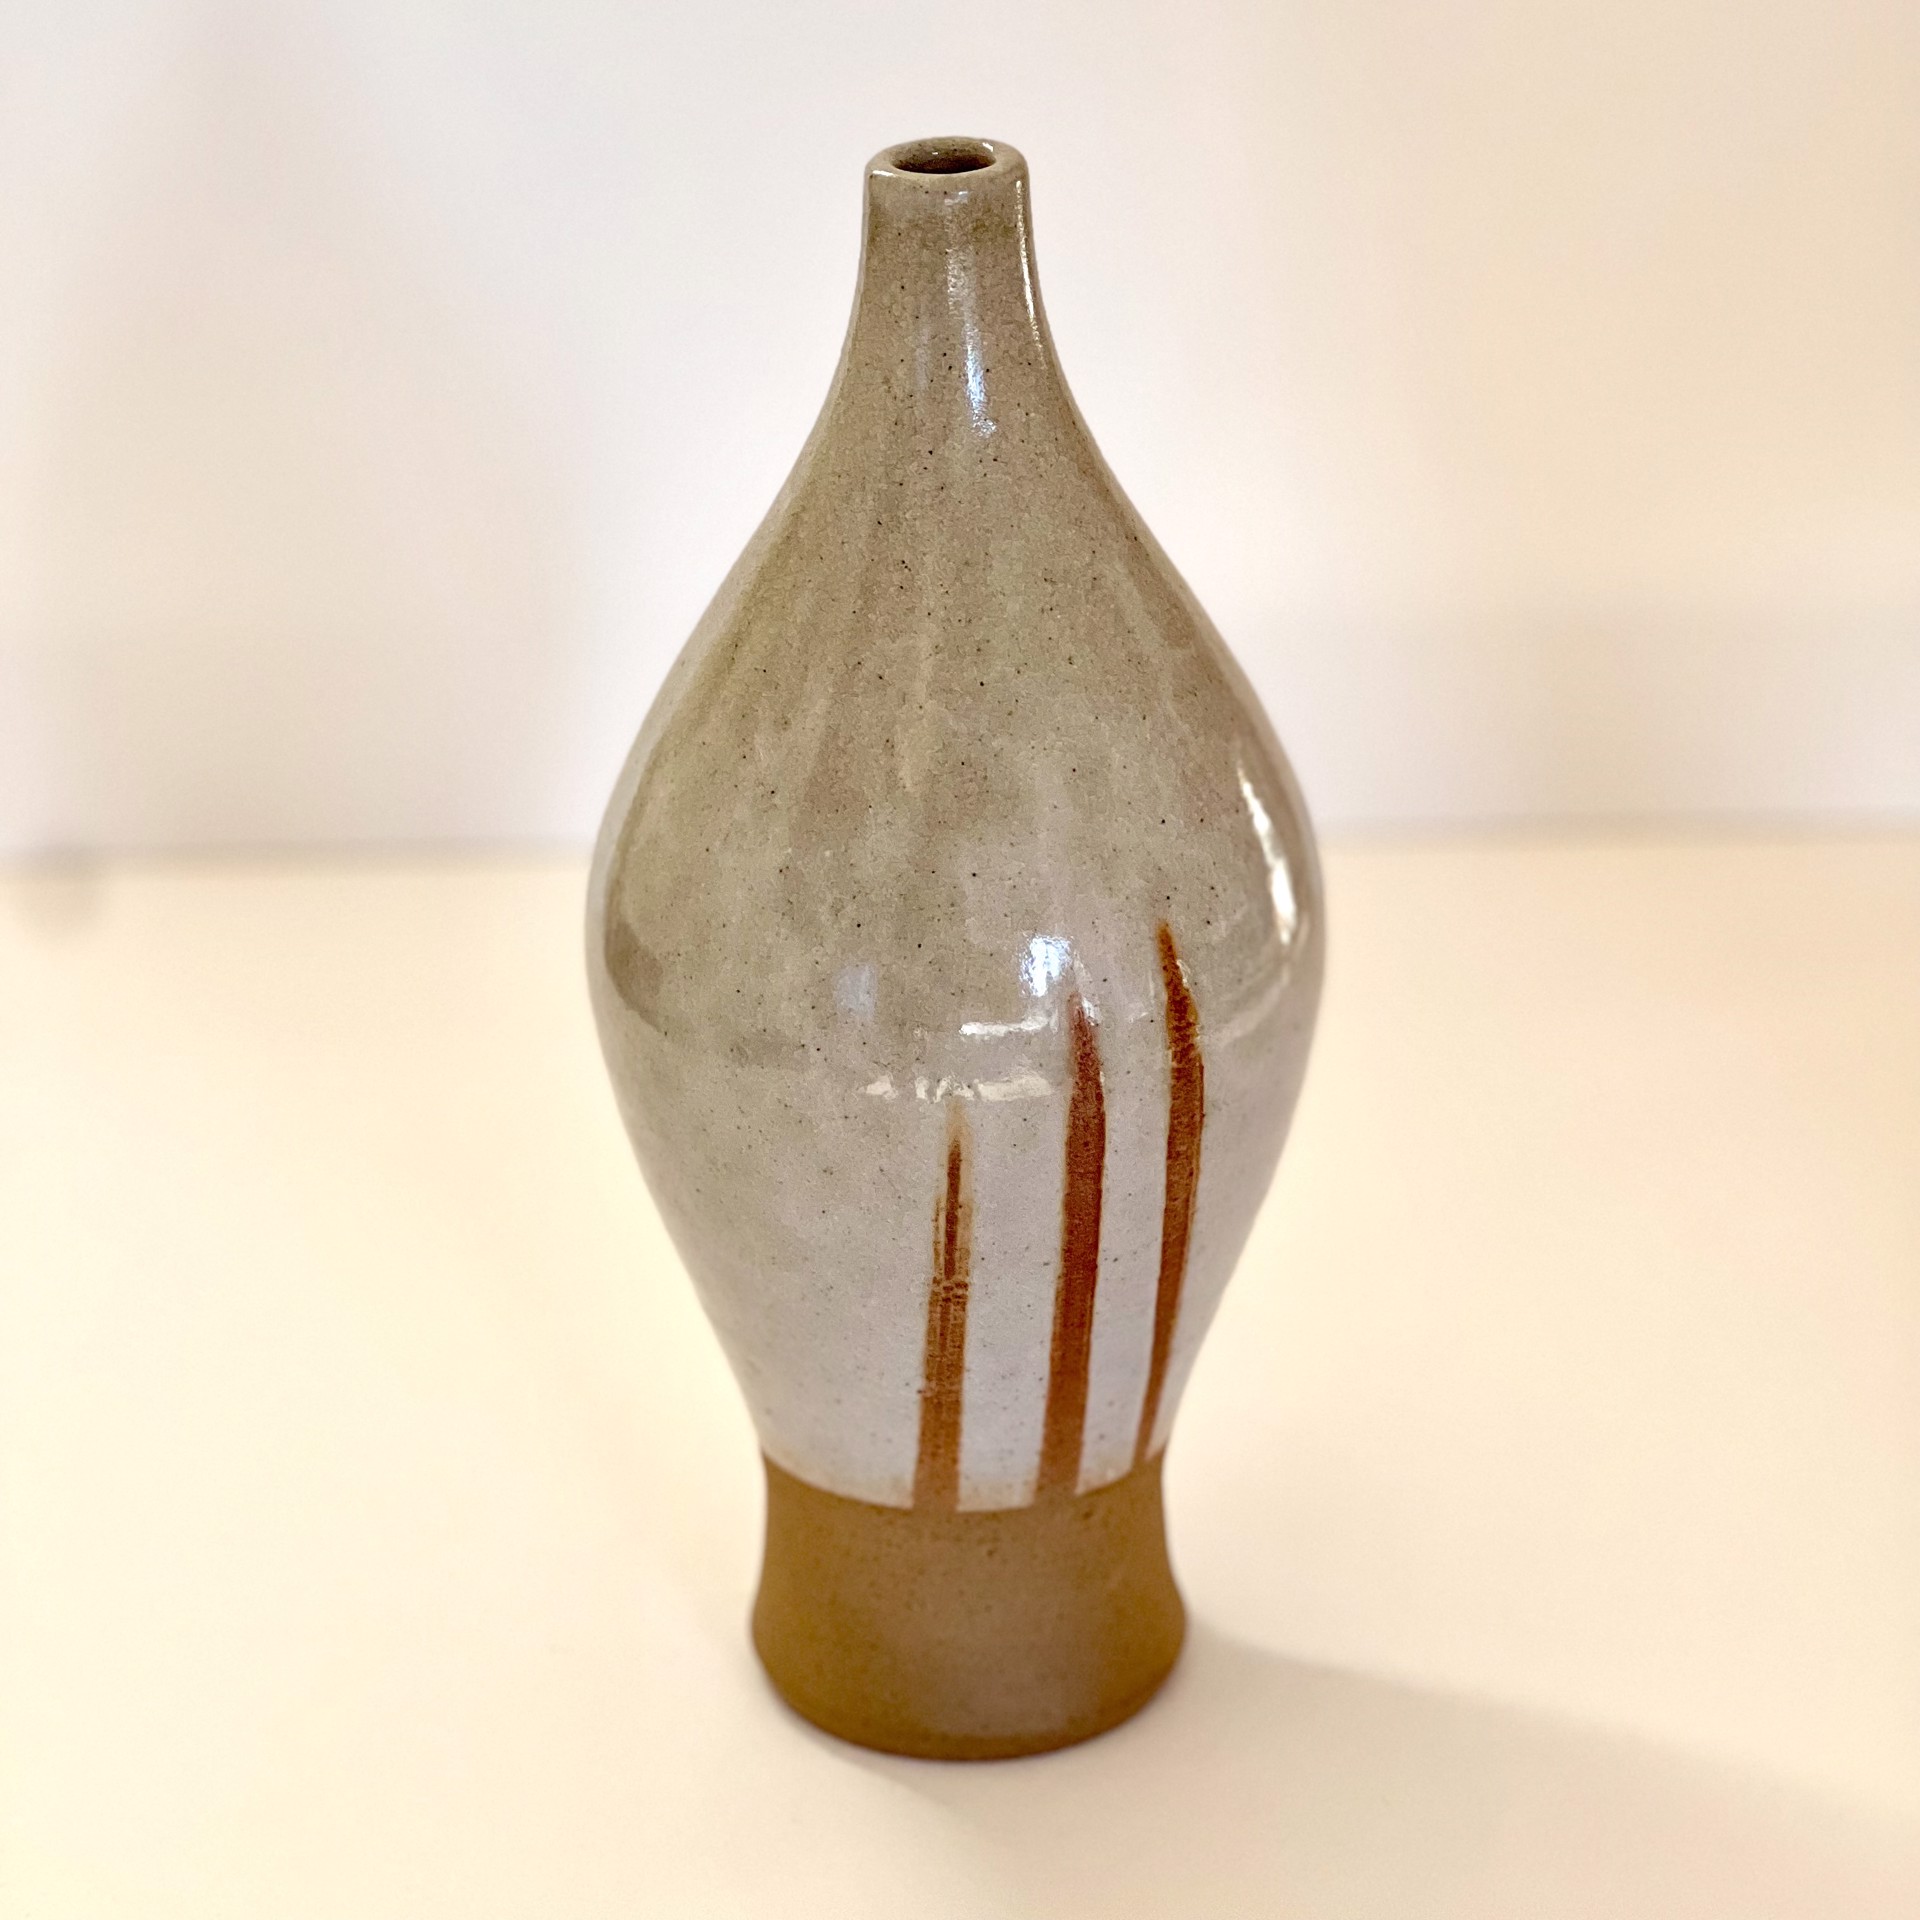 Vase 15 by David LaLomia